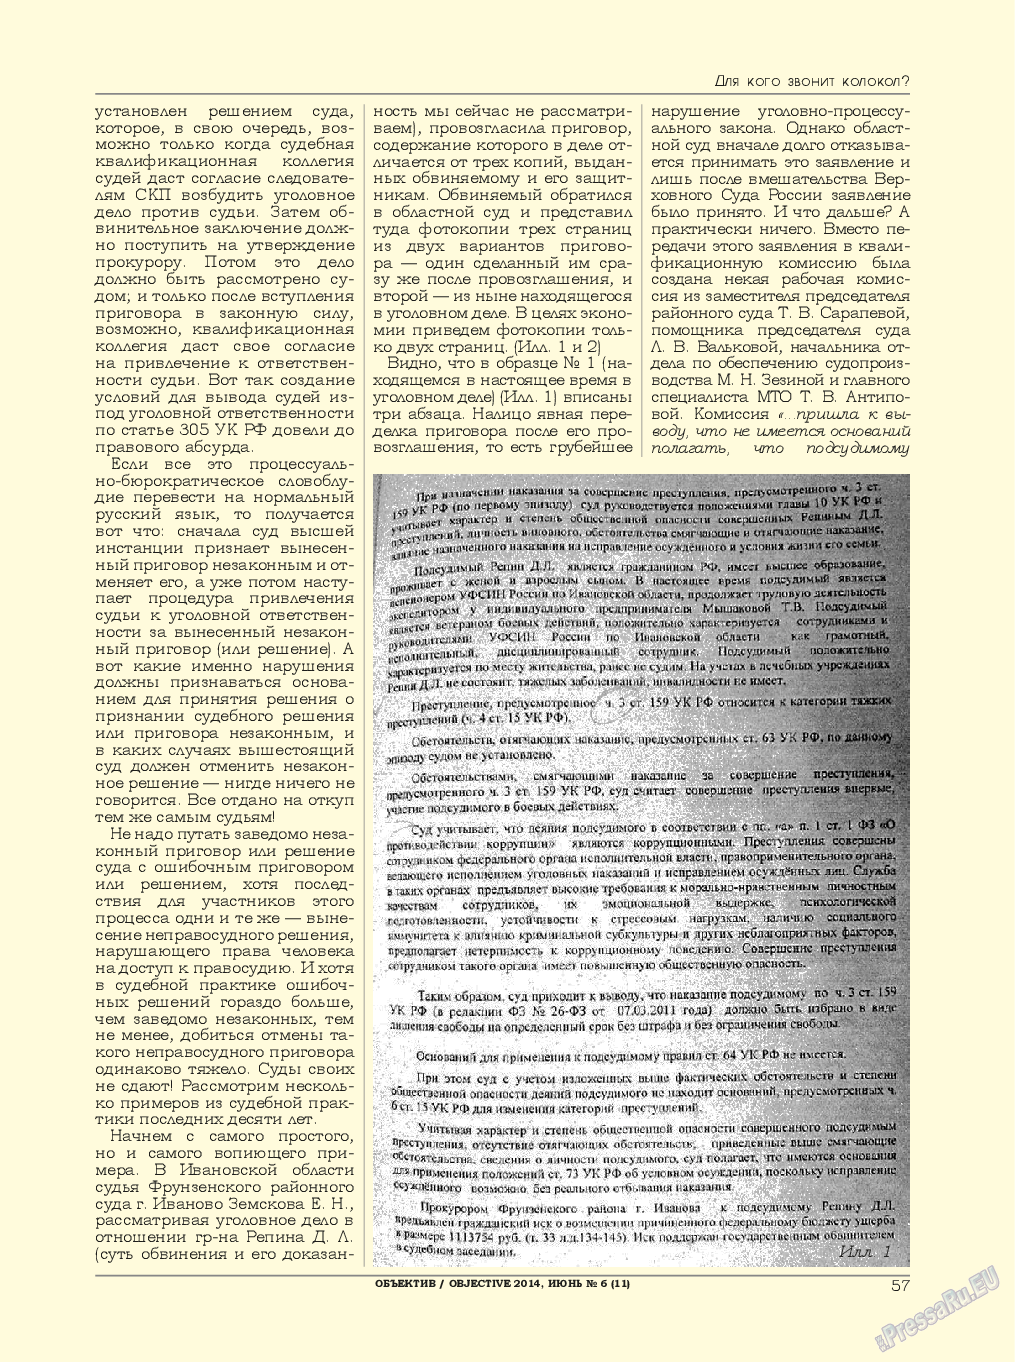 Объектив EU, журнал. 2014 №6 стр.57